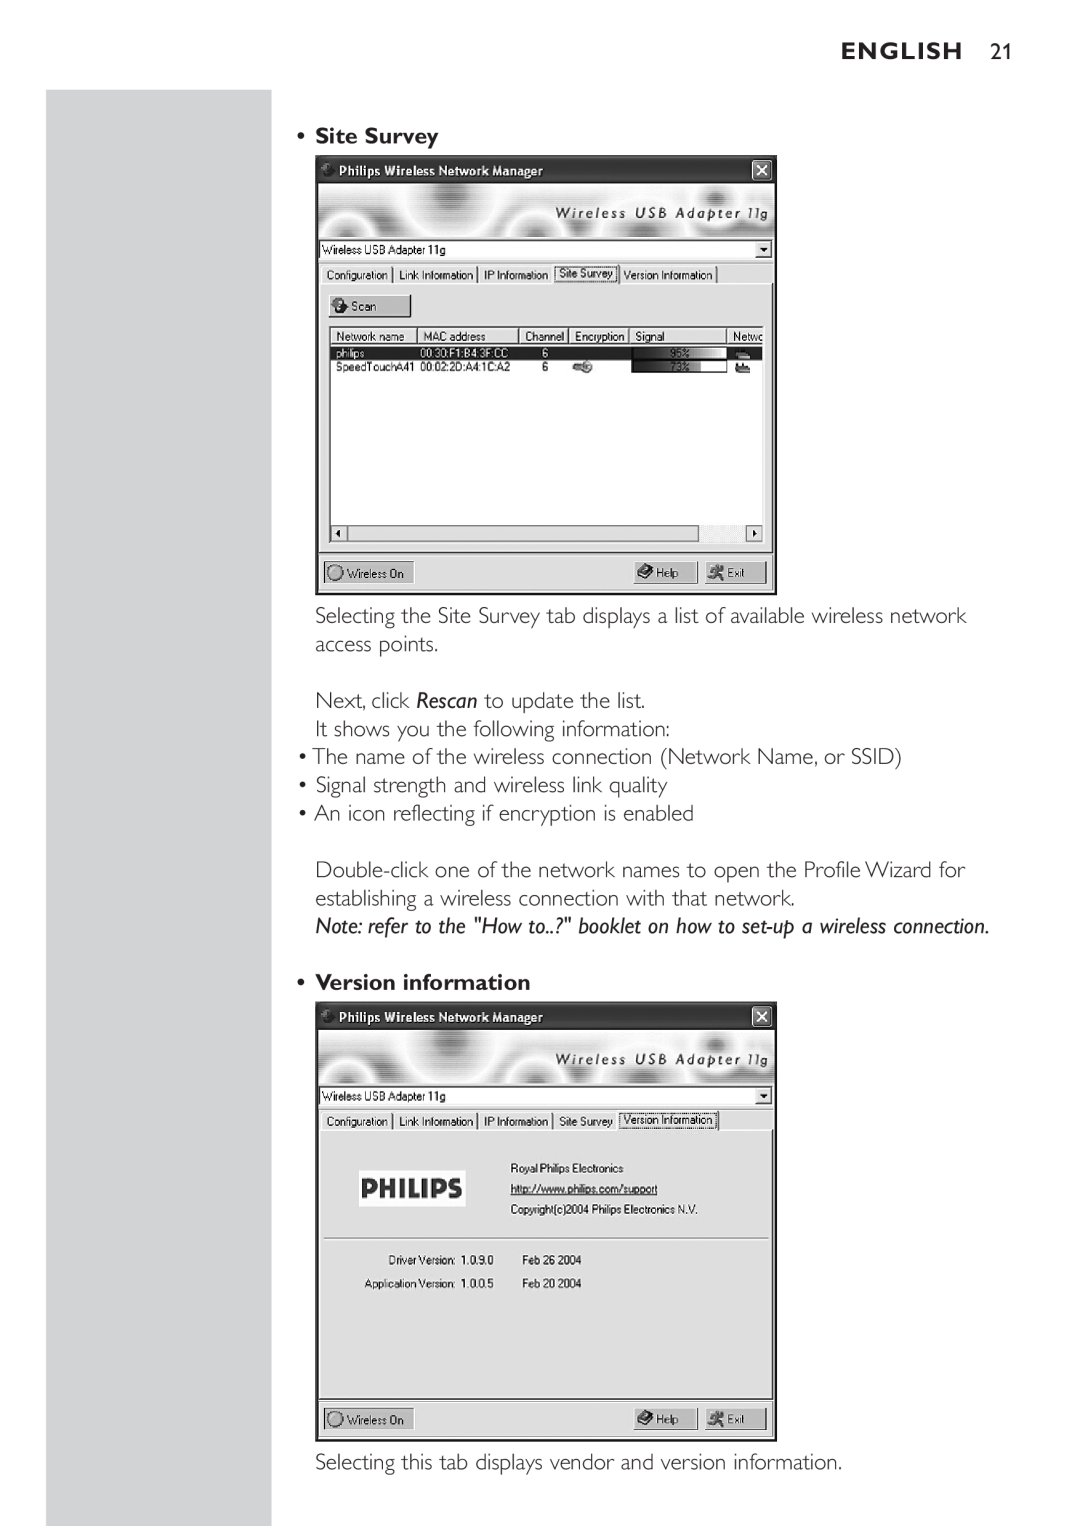 Philips CPWUA054 manual English, Site Survey, Version information 